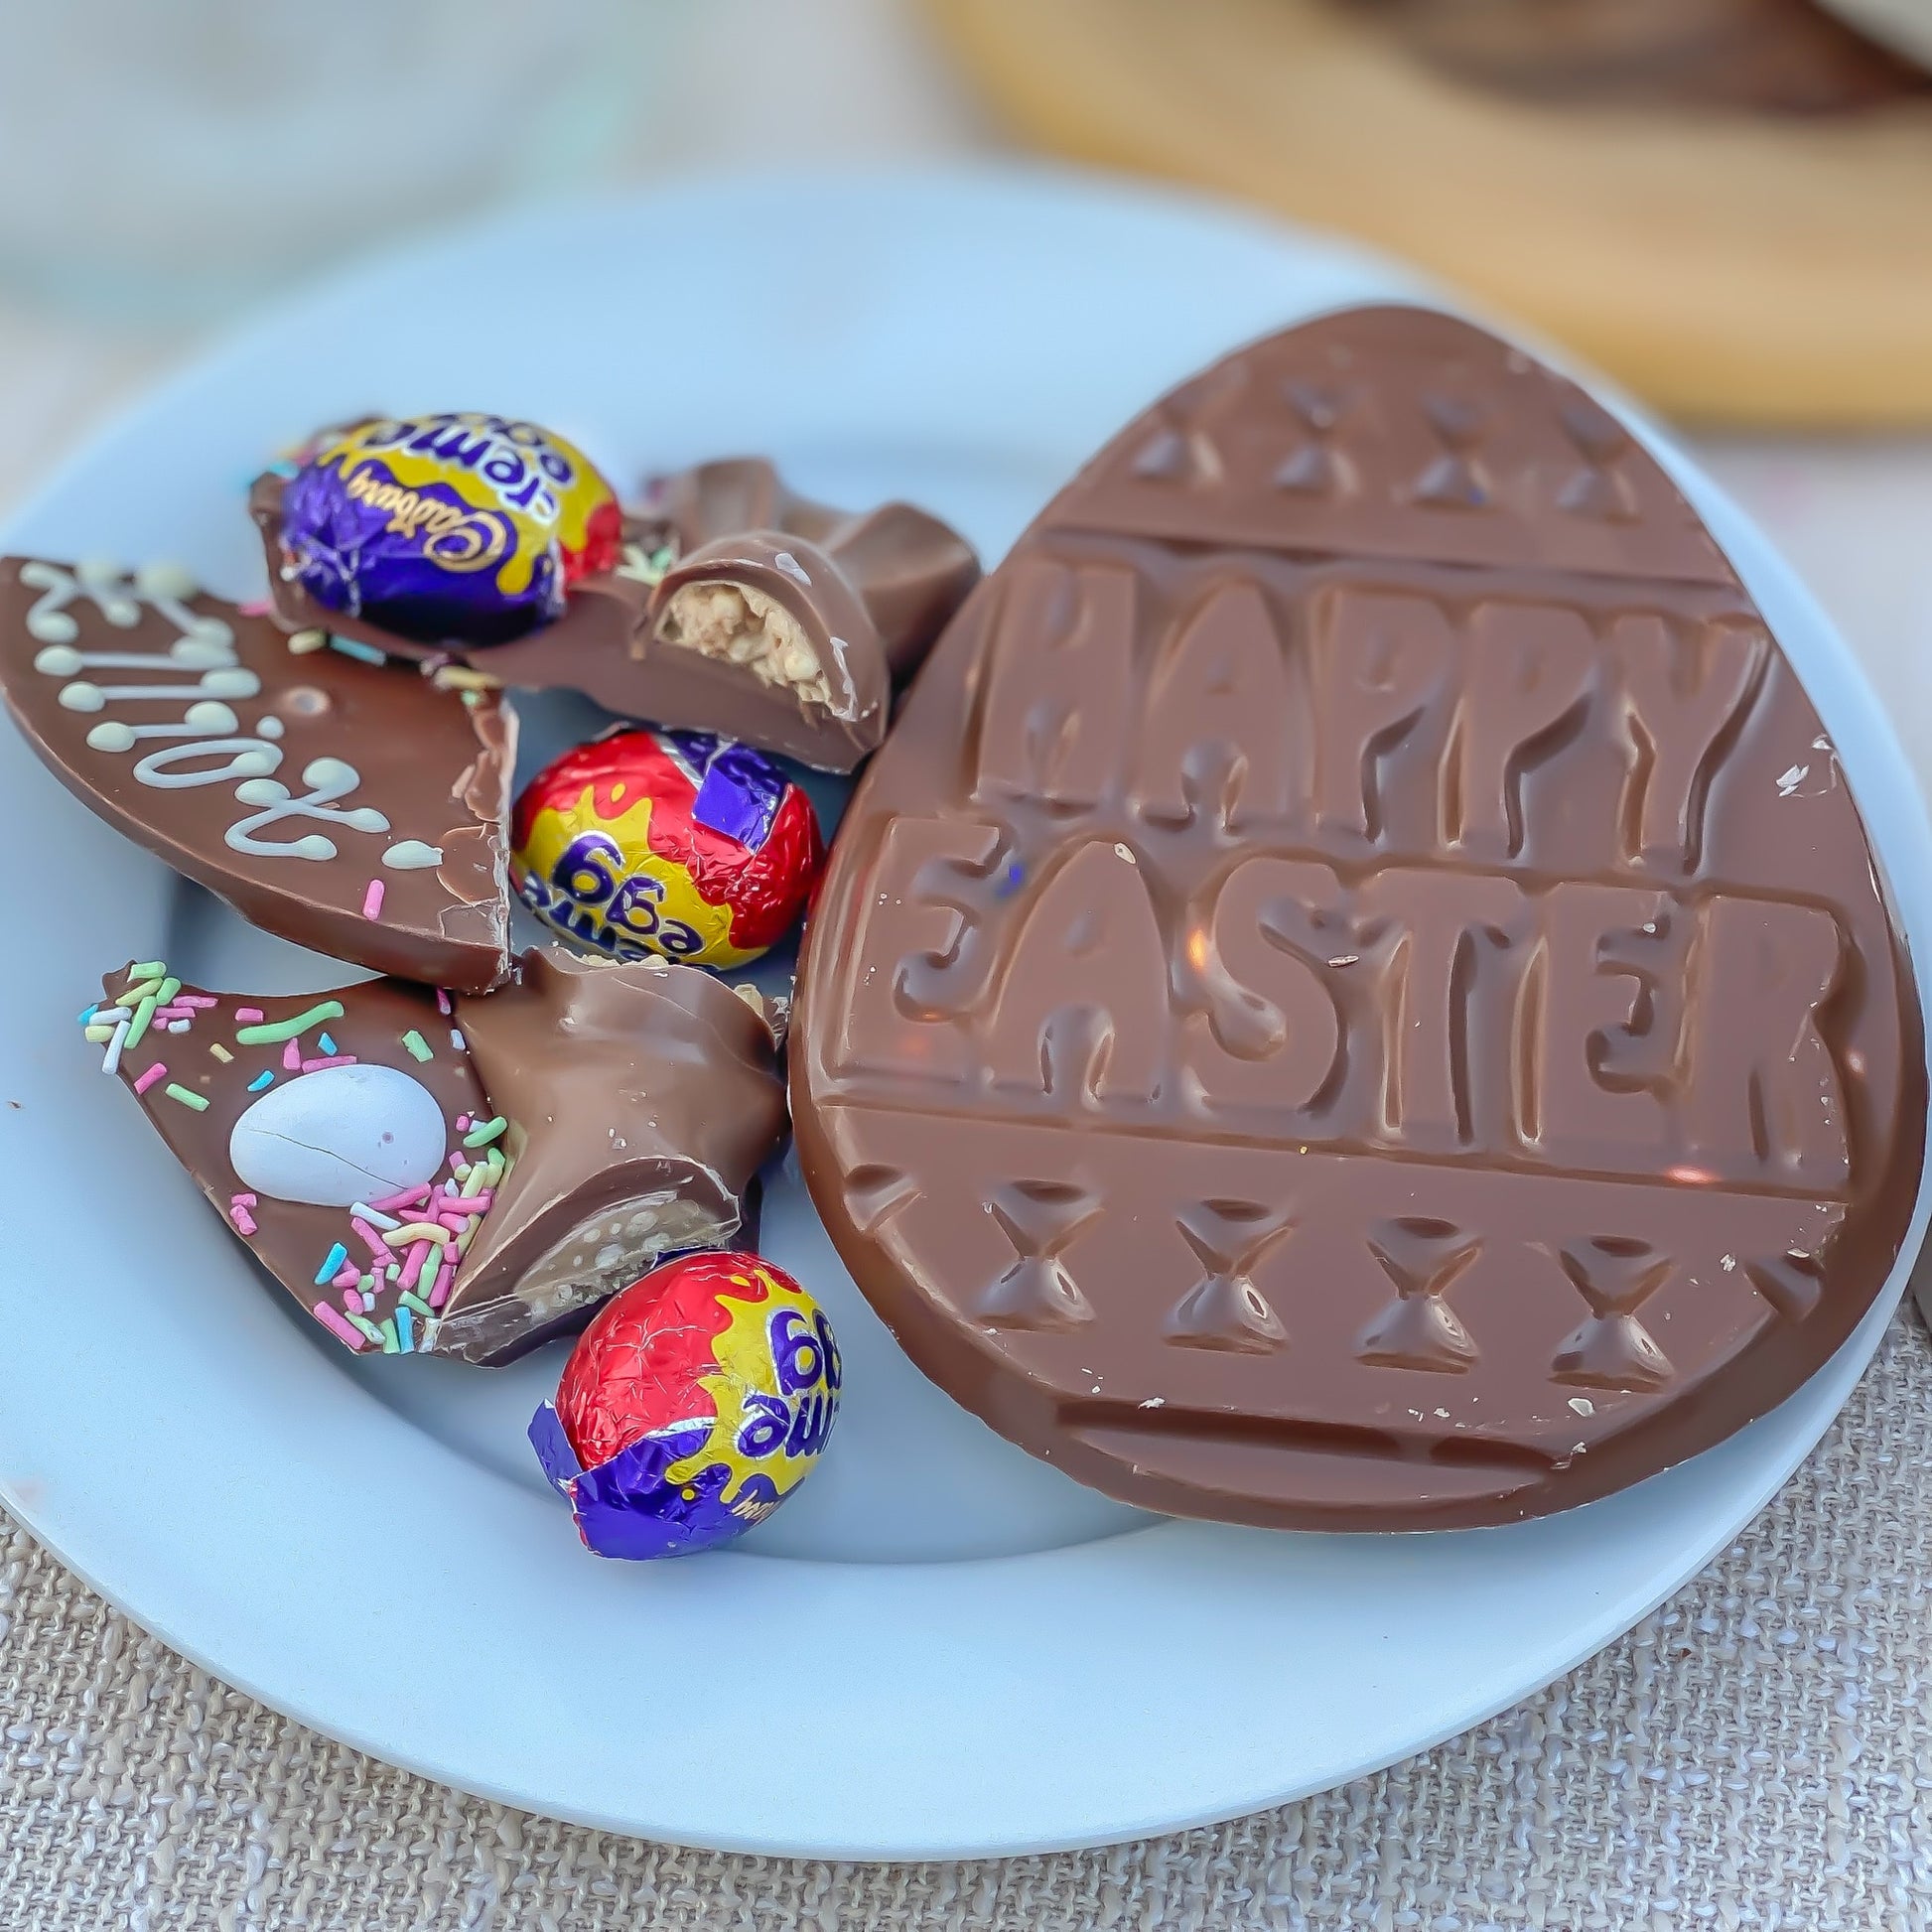 Happy Easter Cadburys Creme Easter egg letterbox gift